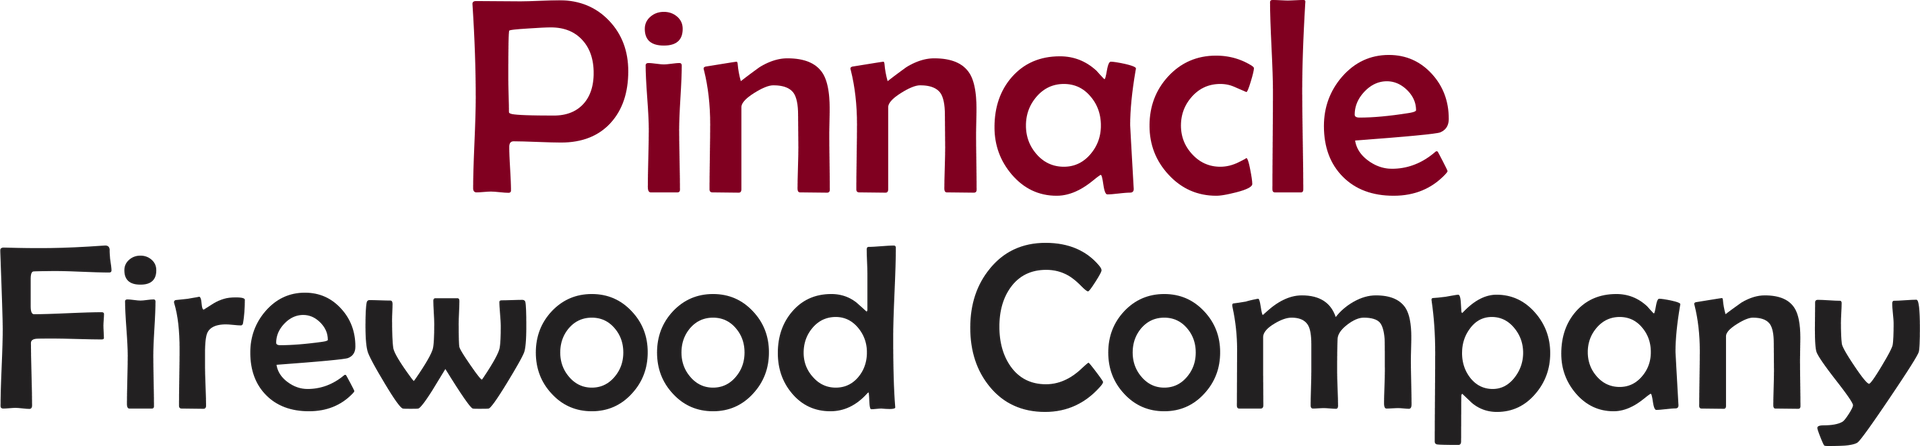 Pinnacle Firewood Company - logo